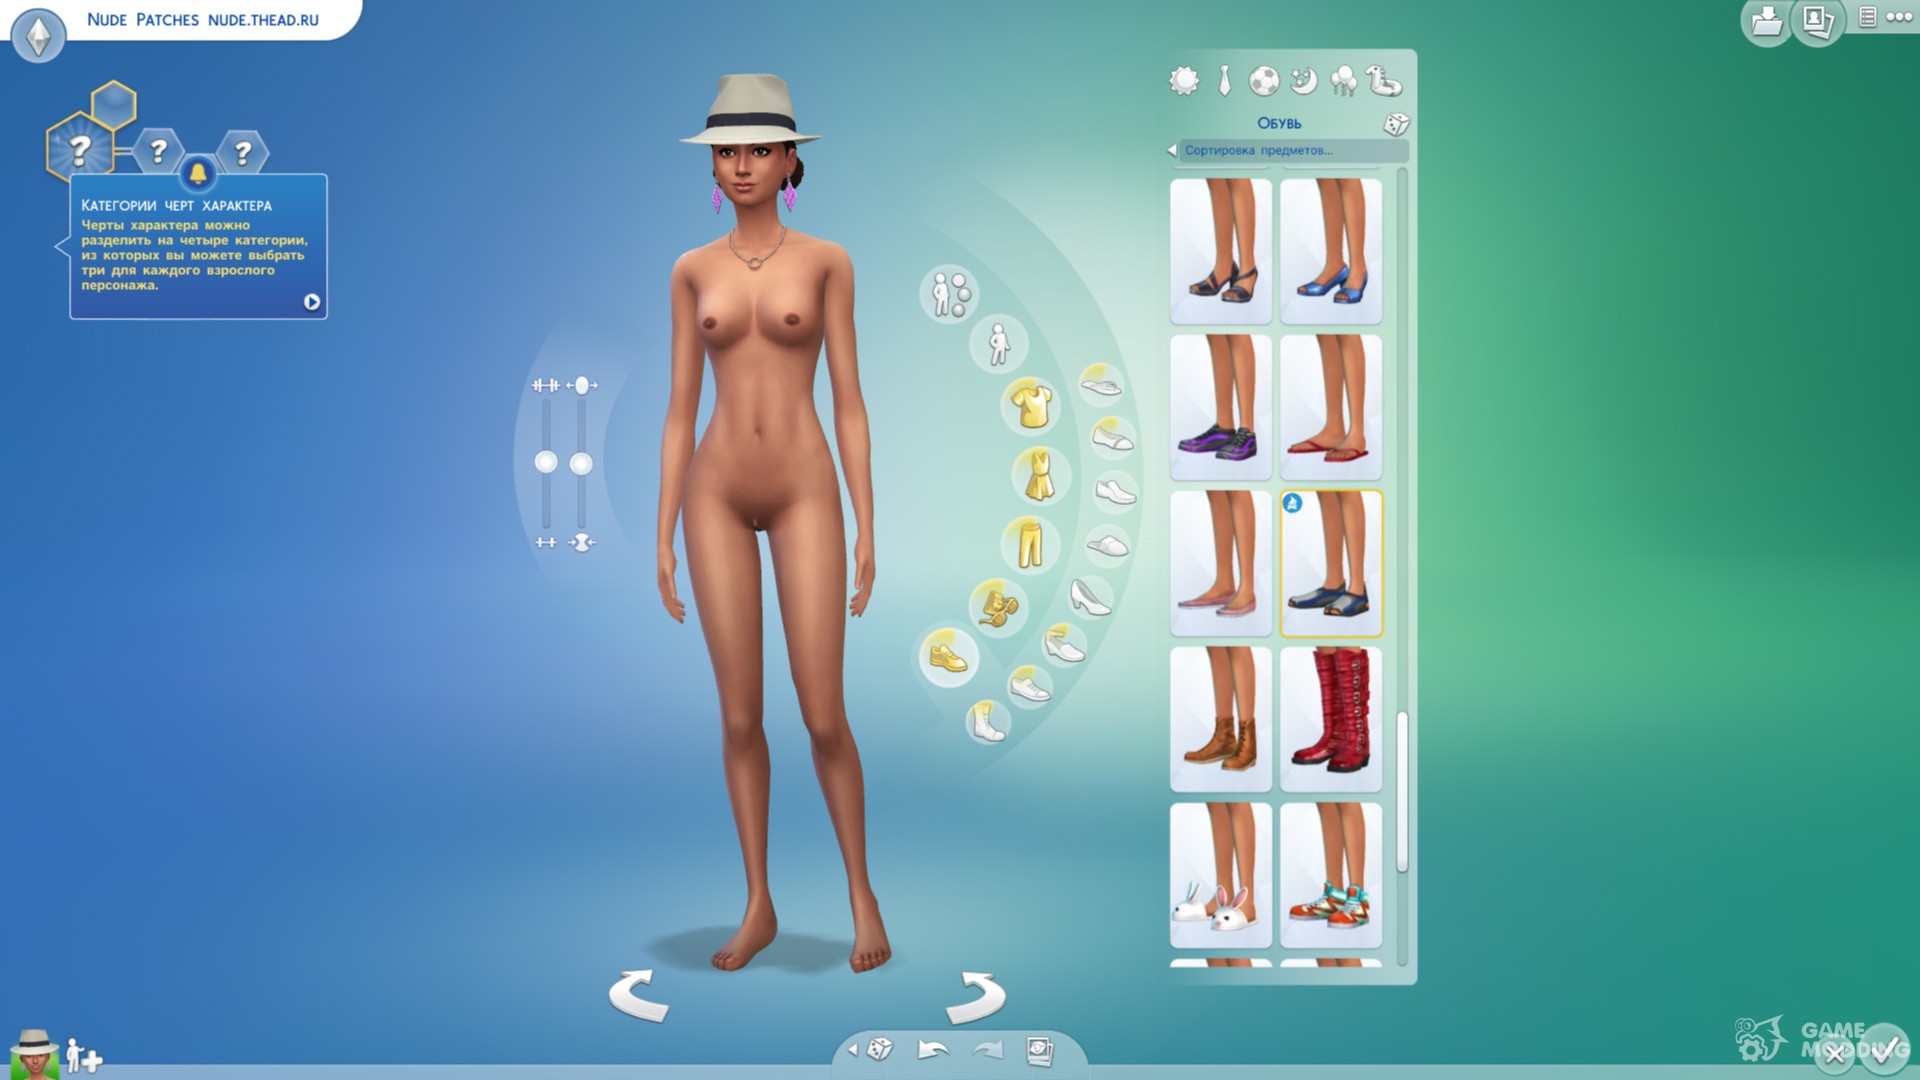 Sims 4 nudity mod